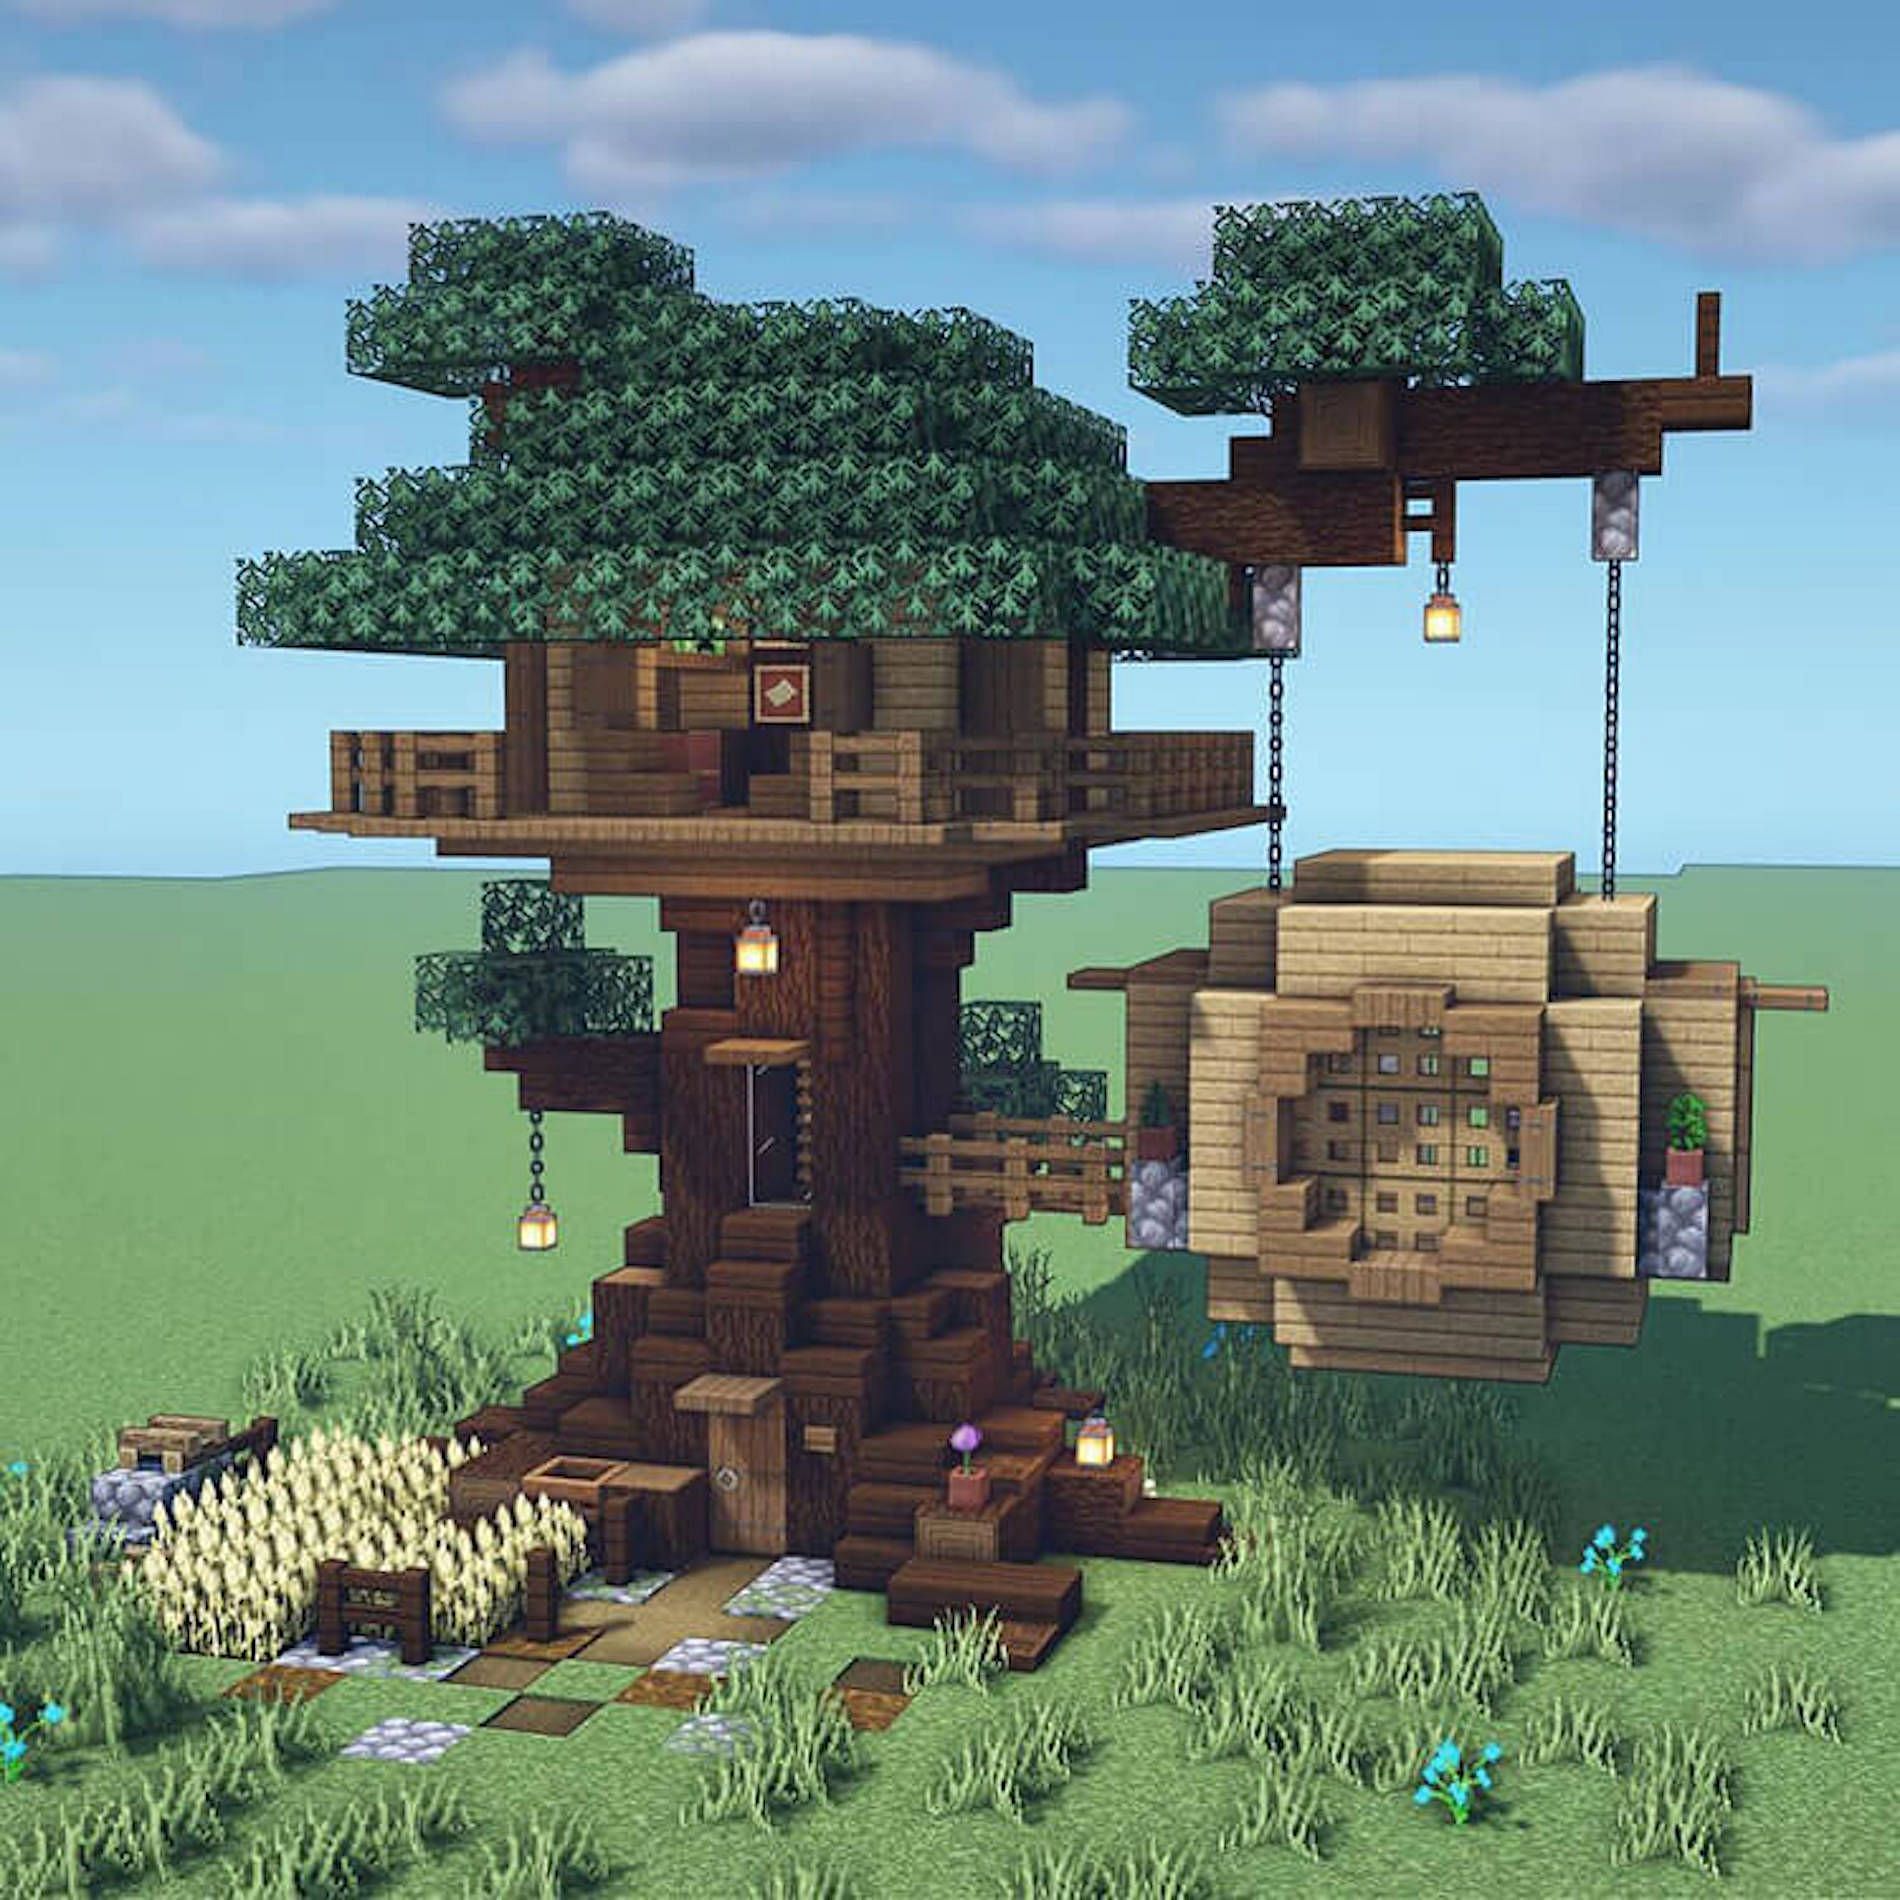 Treehouse build design [Image via Blue Bits on YouTube]